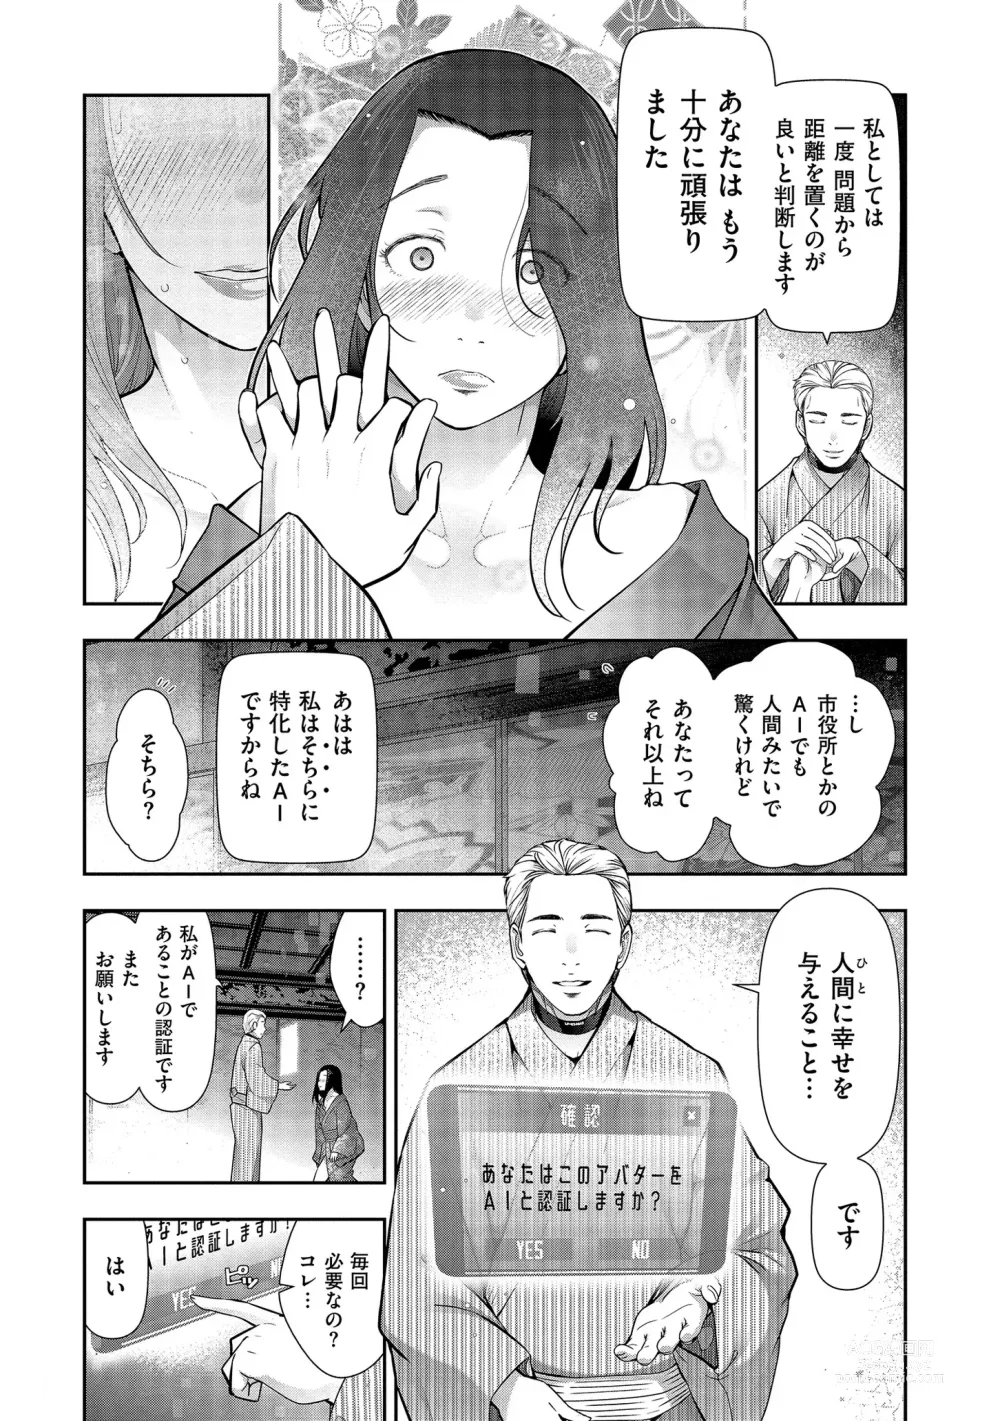 Page 17 of manga Shiawase no Kuni